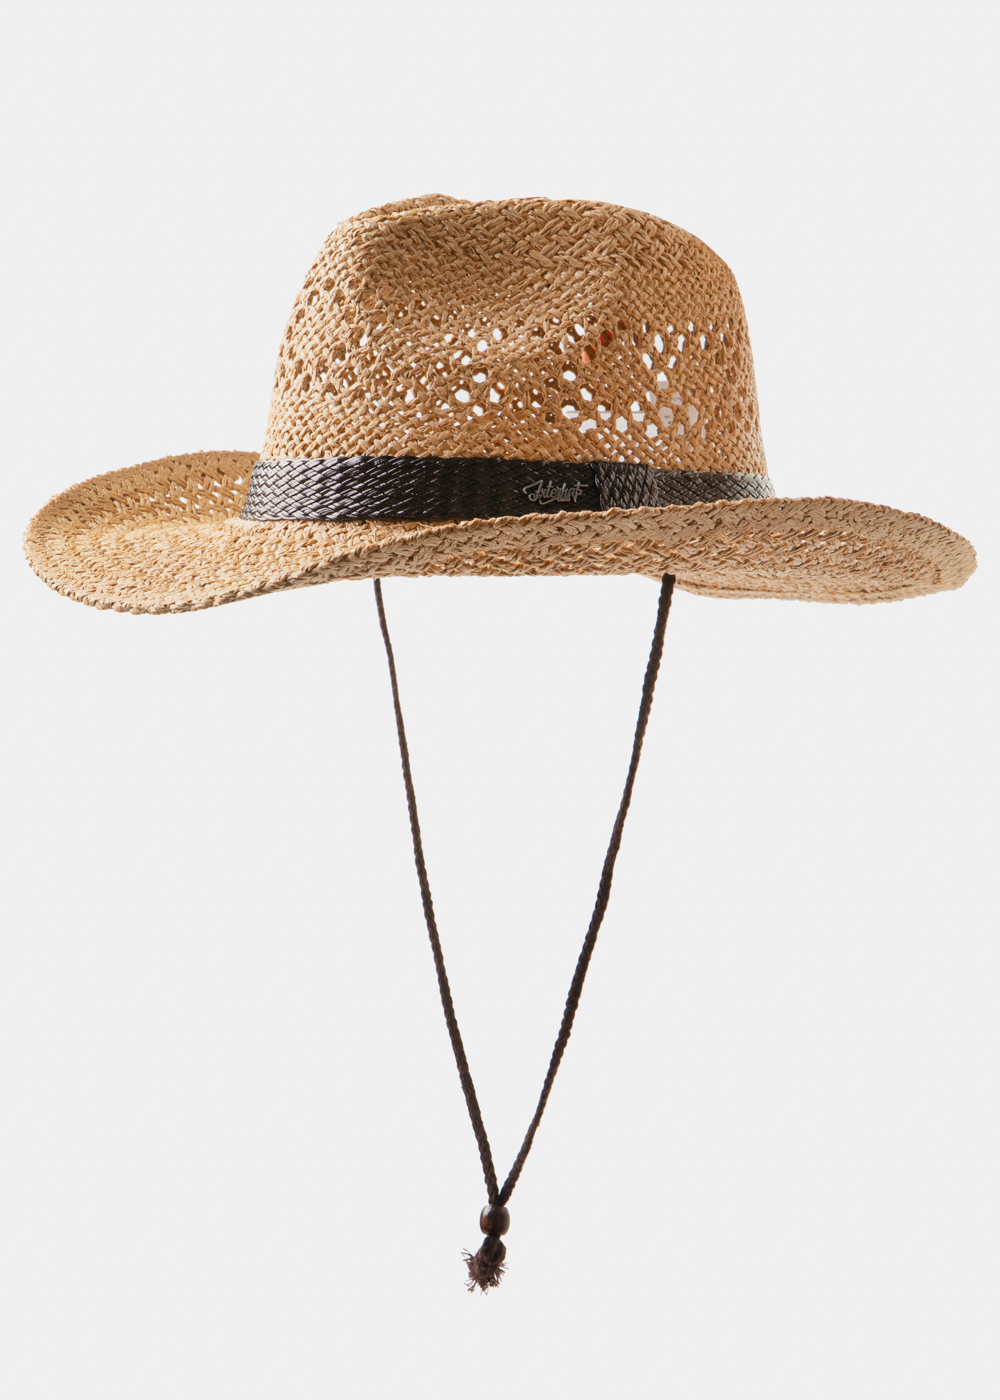 Cowboy Style Hat w/ brown hatband & neck cord